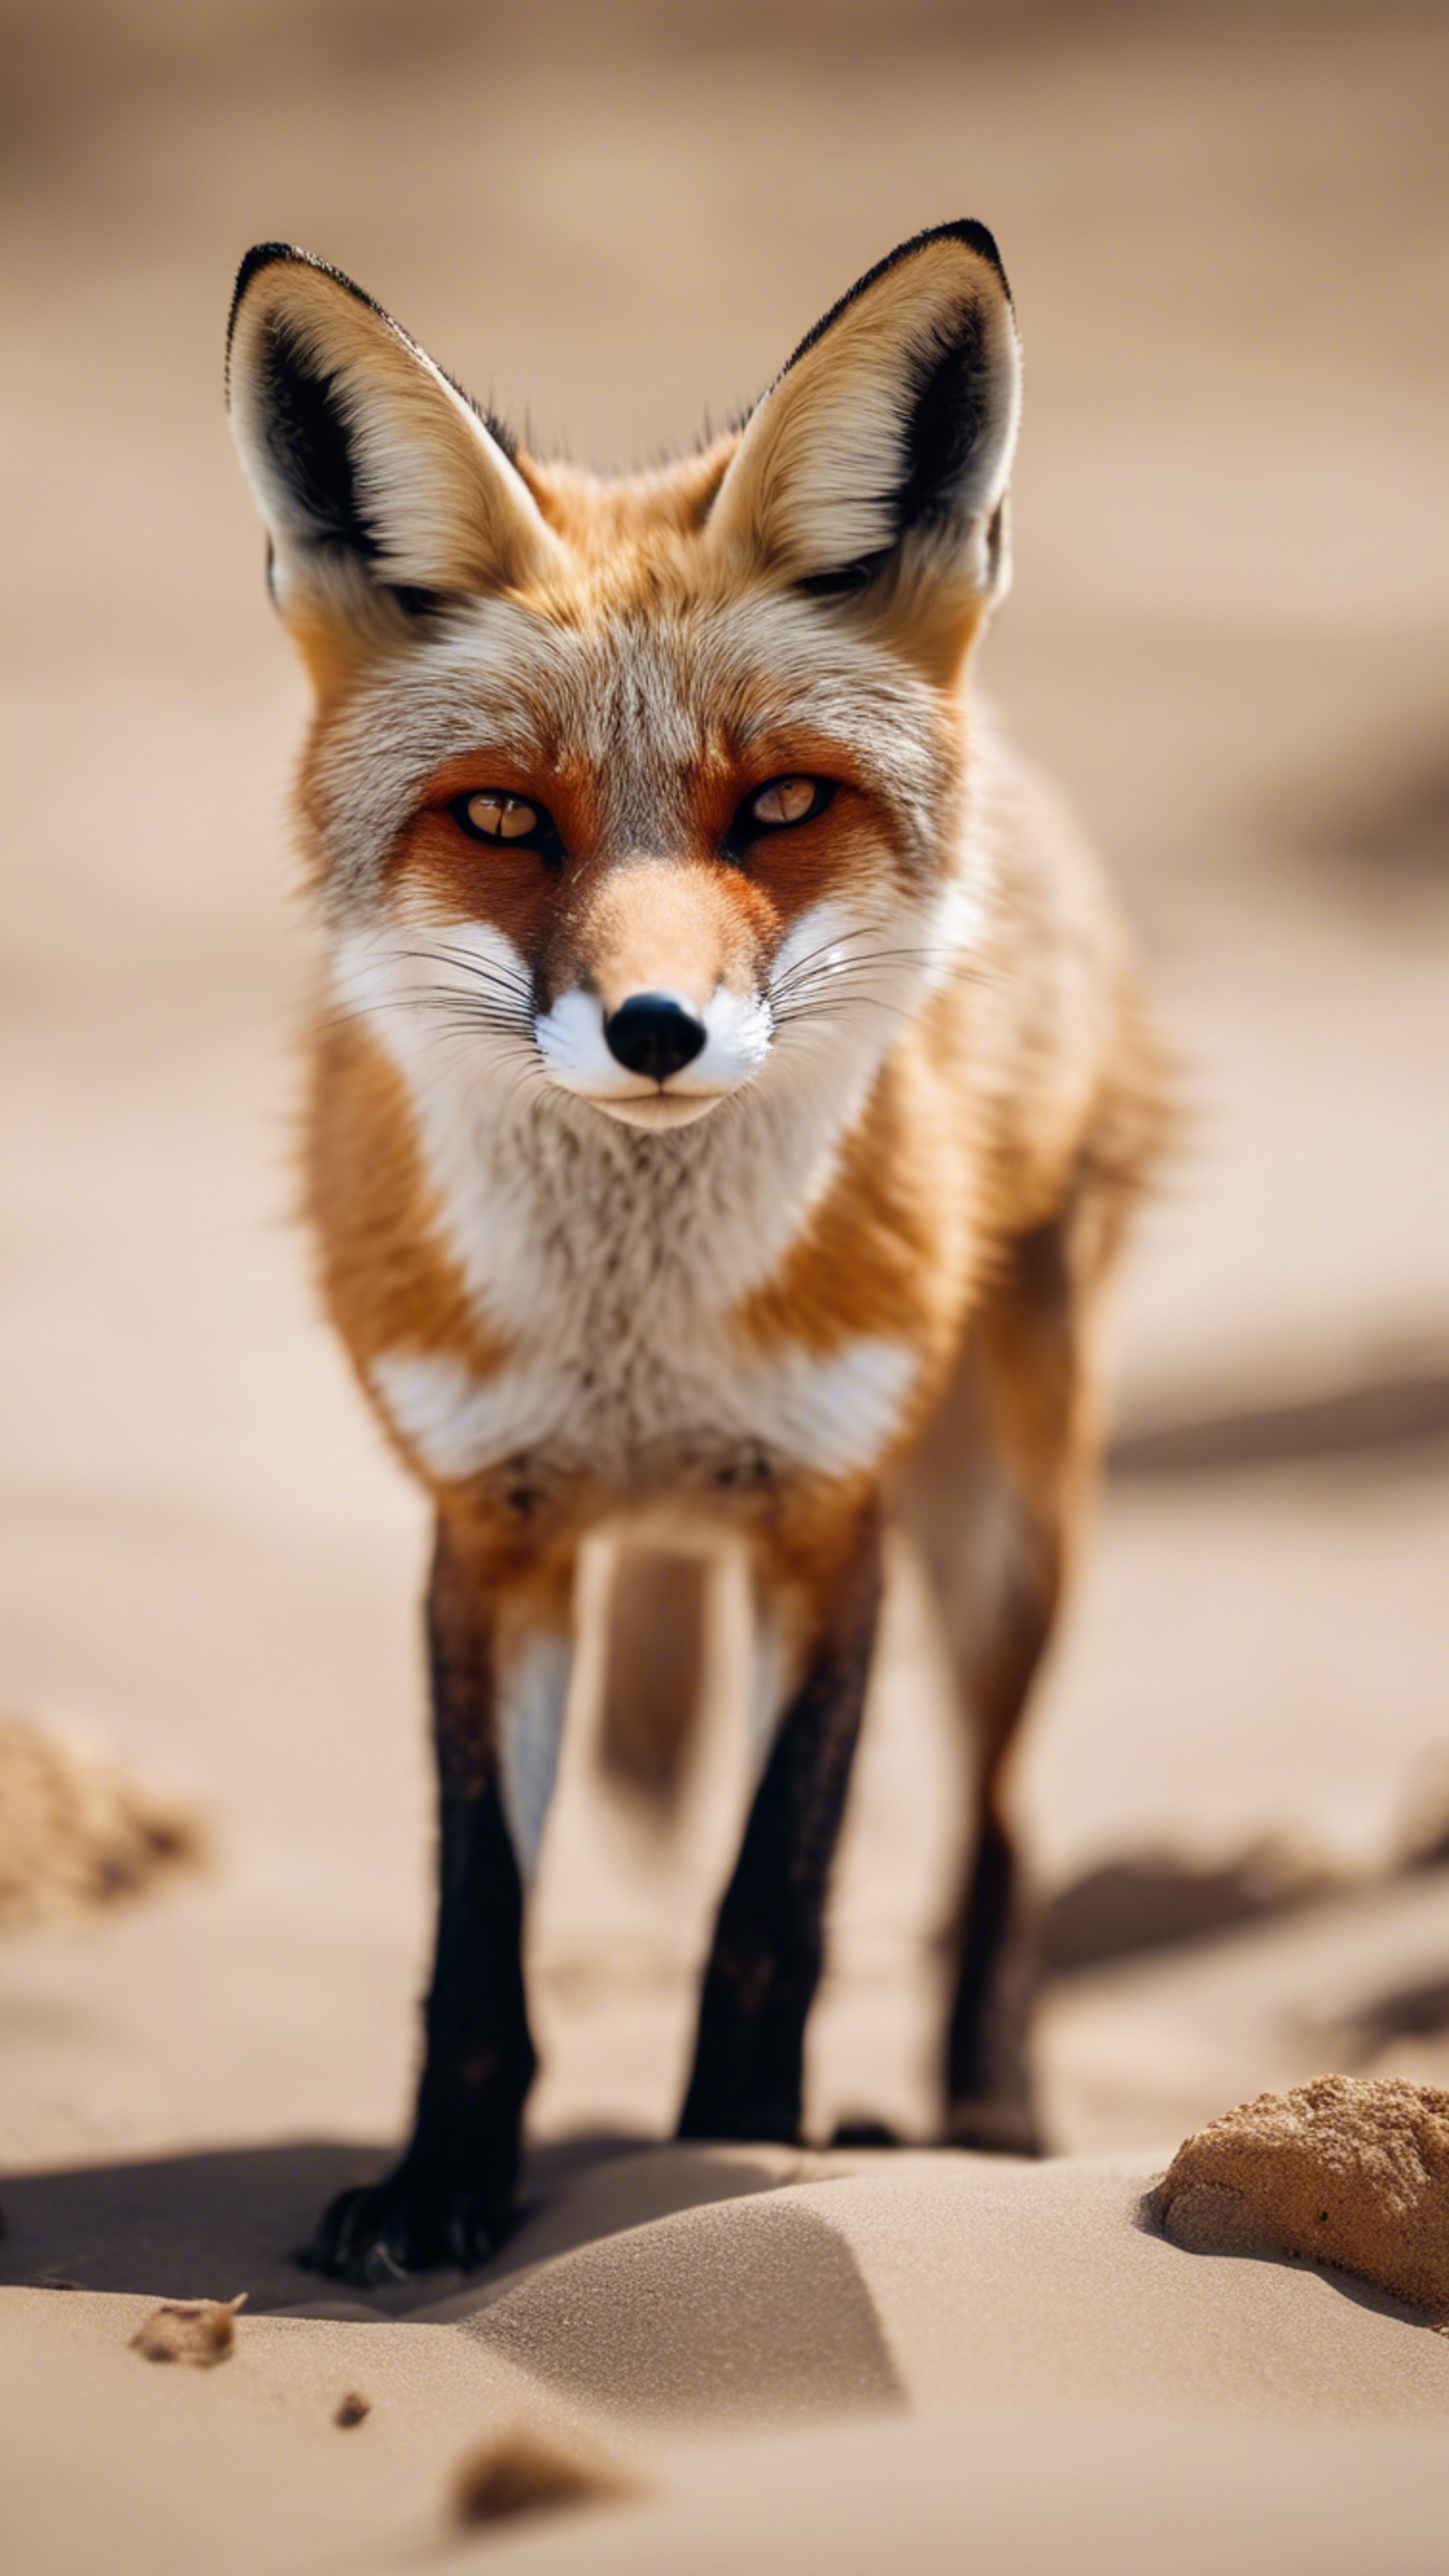 A lone desert fox in its natural habitat, roaming around amid the sand dunes. duvar kağıdı[17bb71b2b2bc40f18dca]